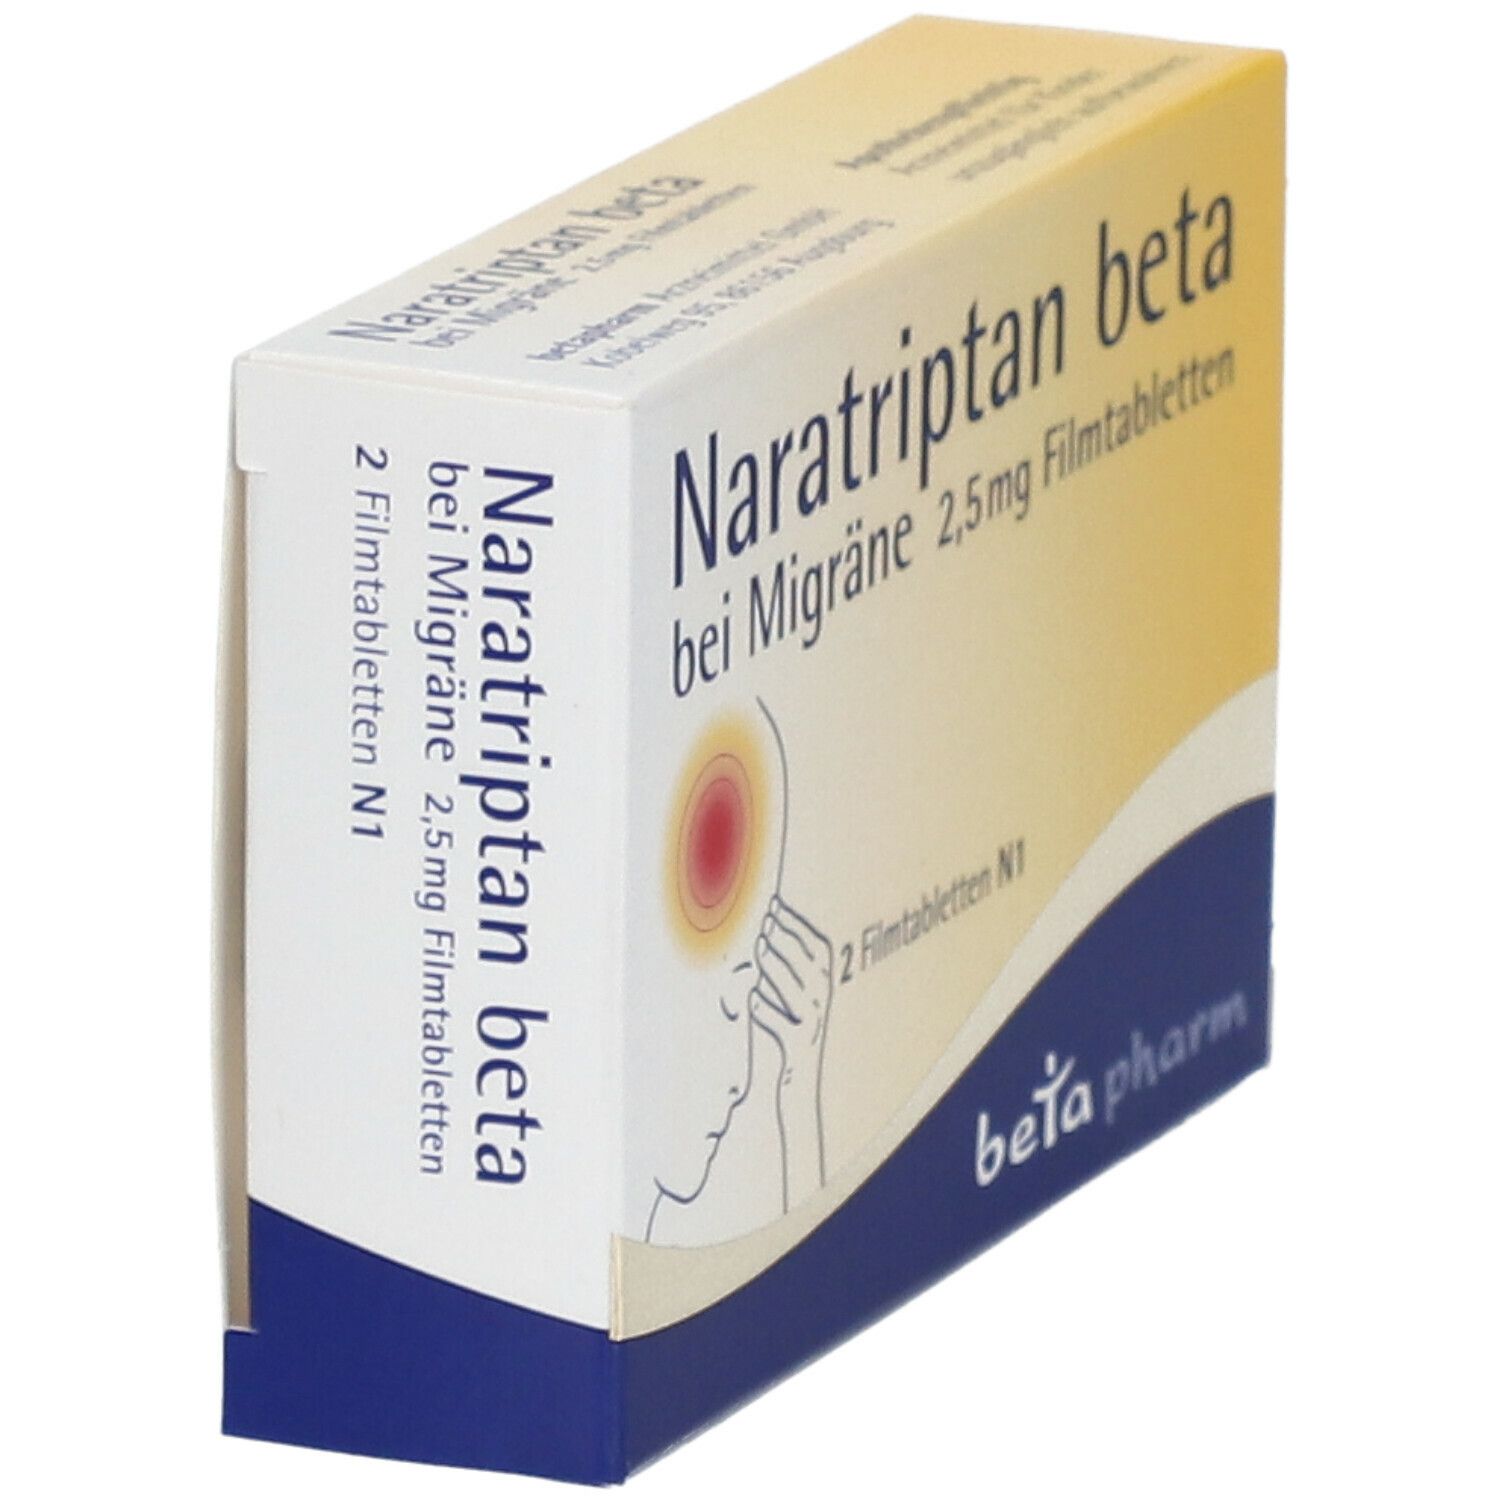 Naratriptan beta 2,5 mg